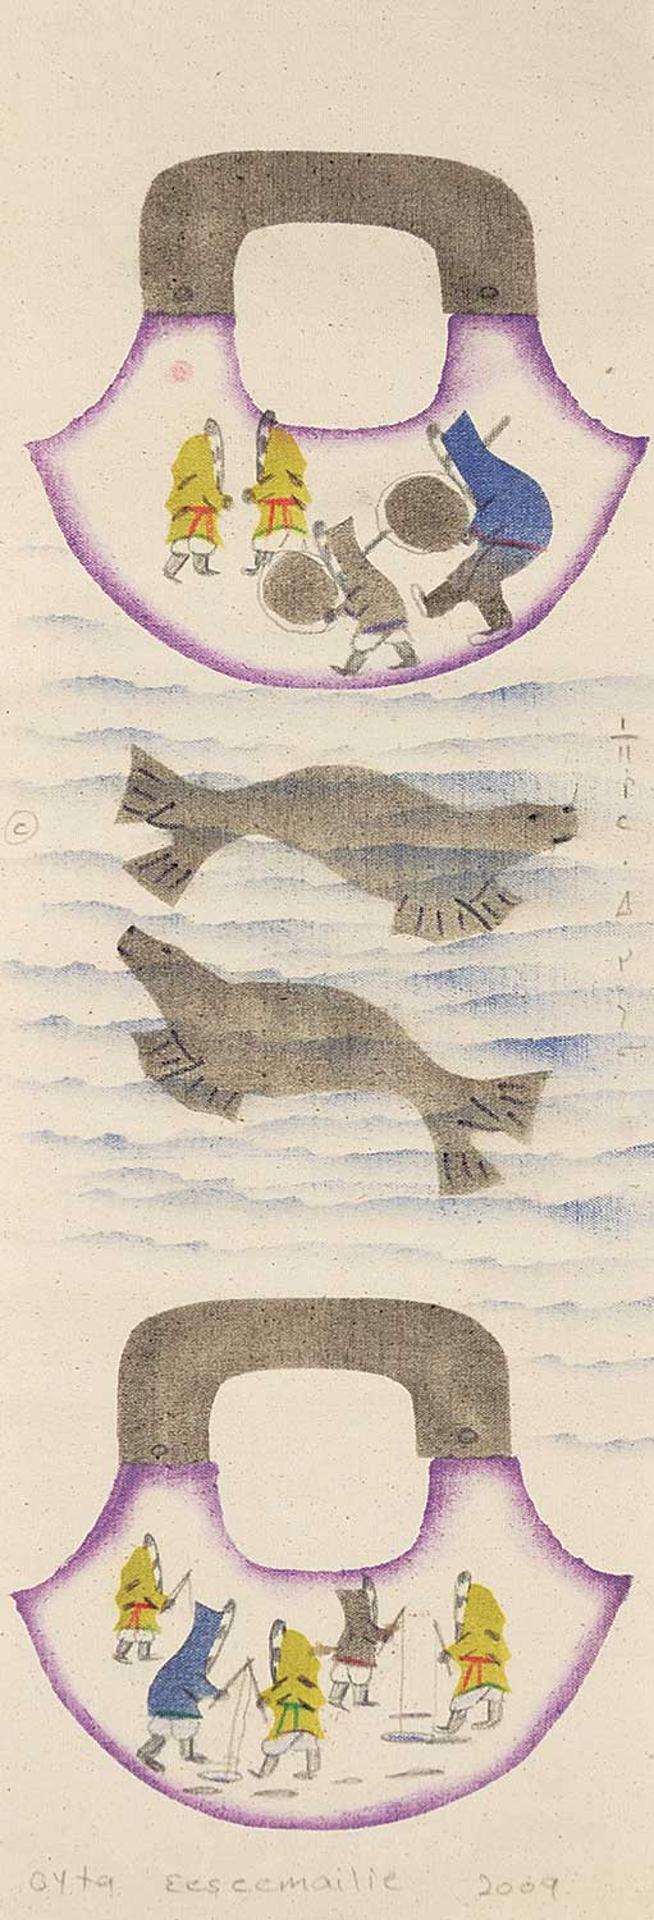 Gyta Eeseemailee (1955) - Untitled - Ulus and Seals